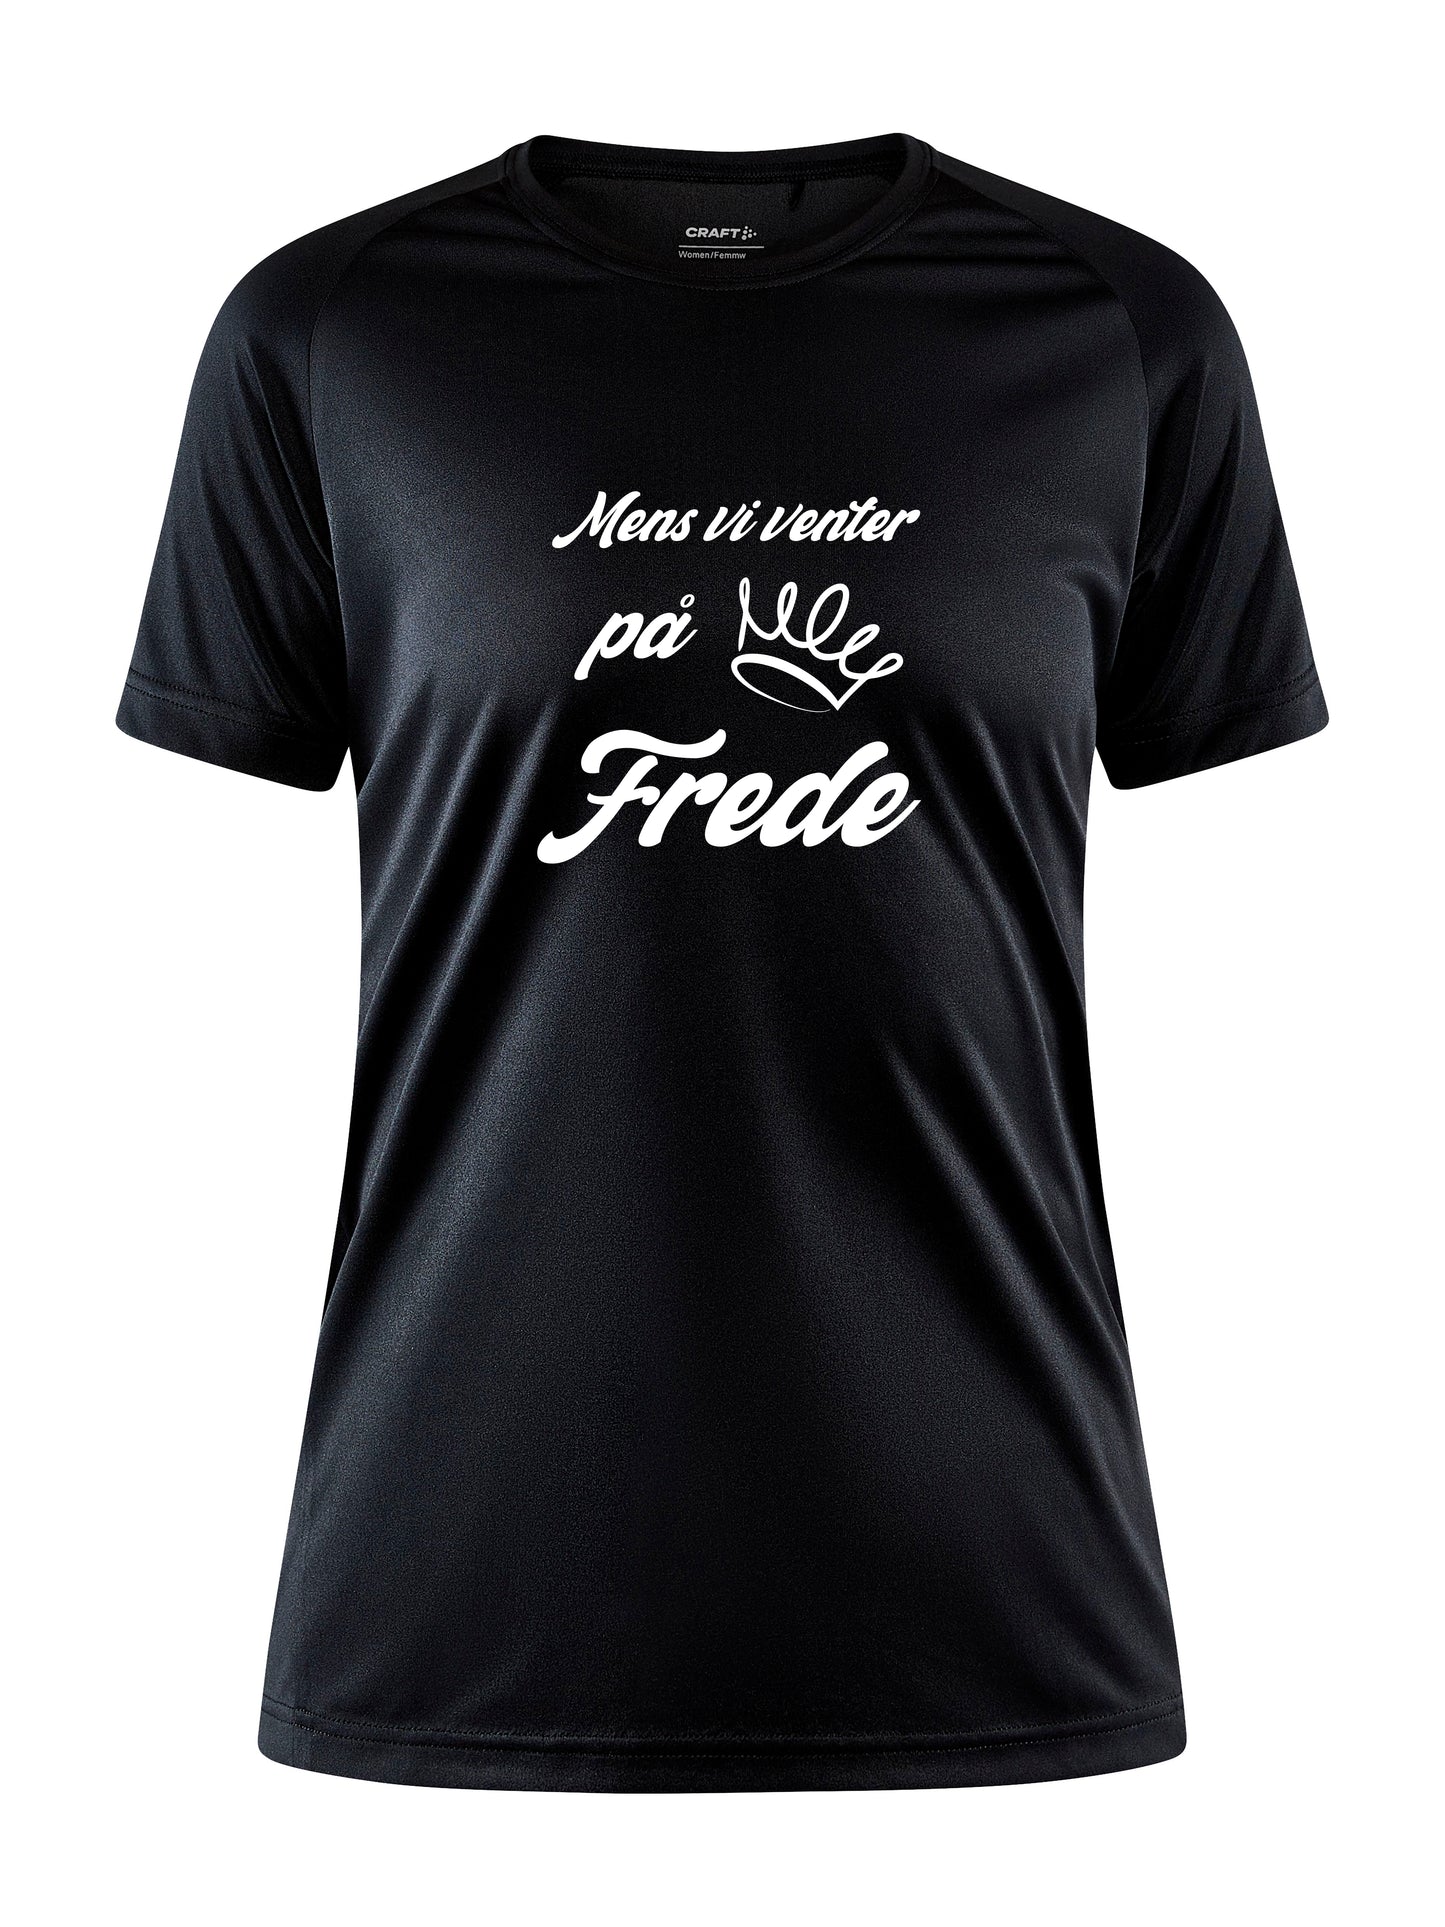 Løbe t-shirt til damer: Mens vi venter på Frede. Craft Core Unify Training Tee.